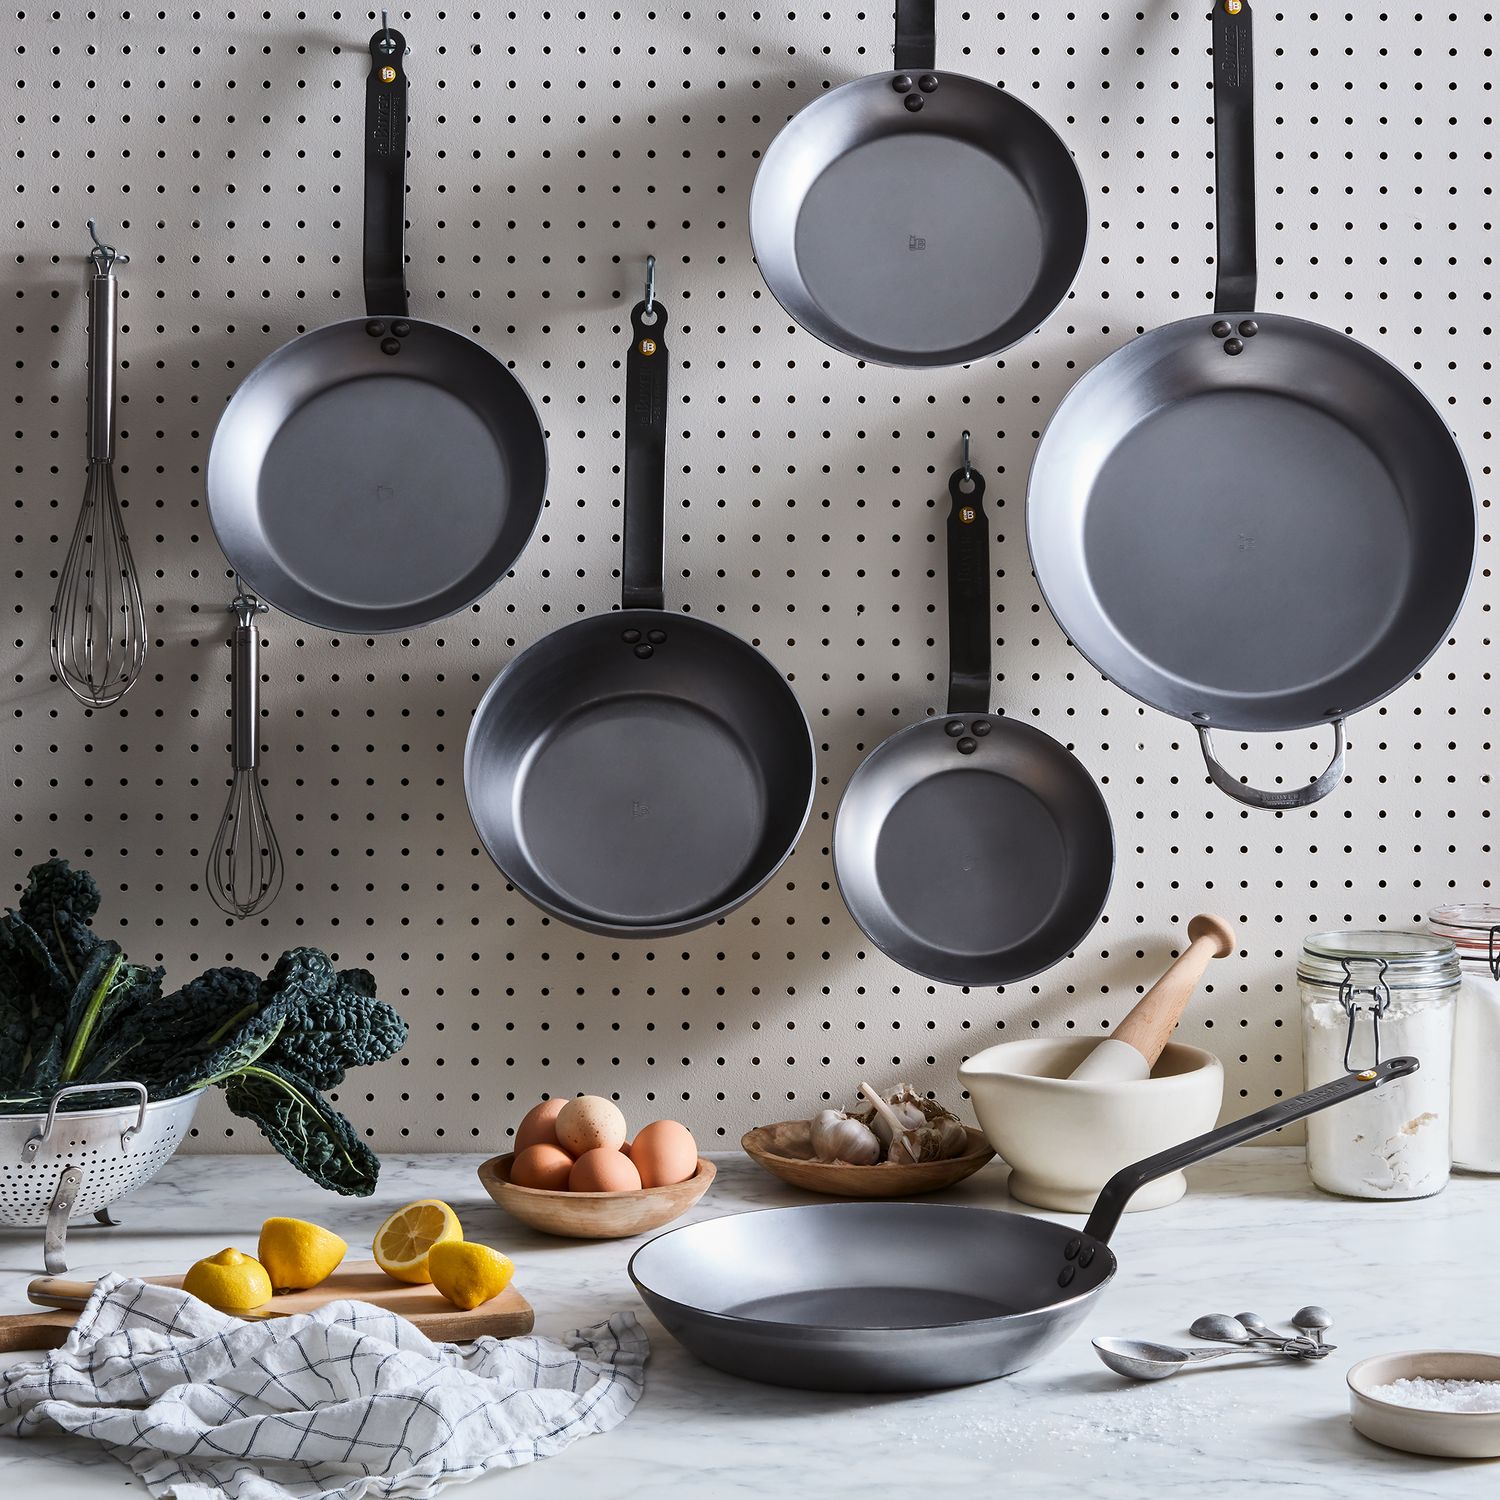 de Buyer Mineral B Carbon Steel Cookware, Pan, Skillet, Wok, or Omelet, on  Food52